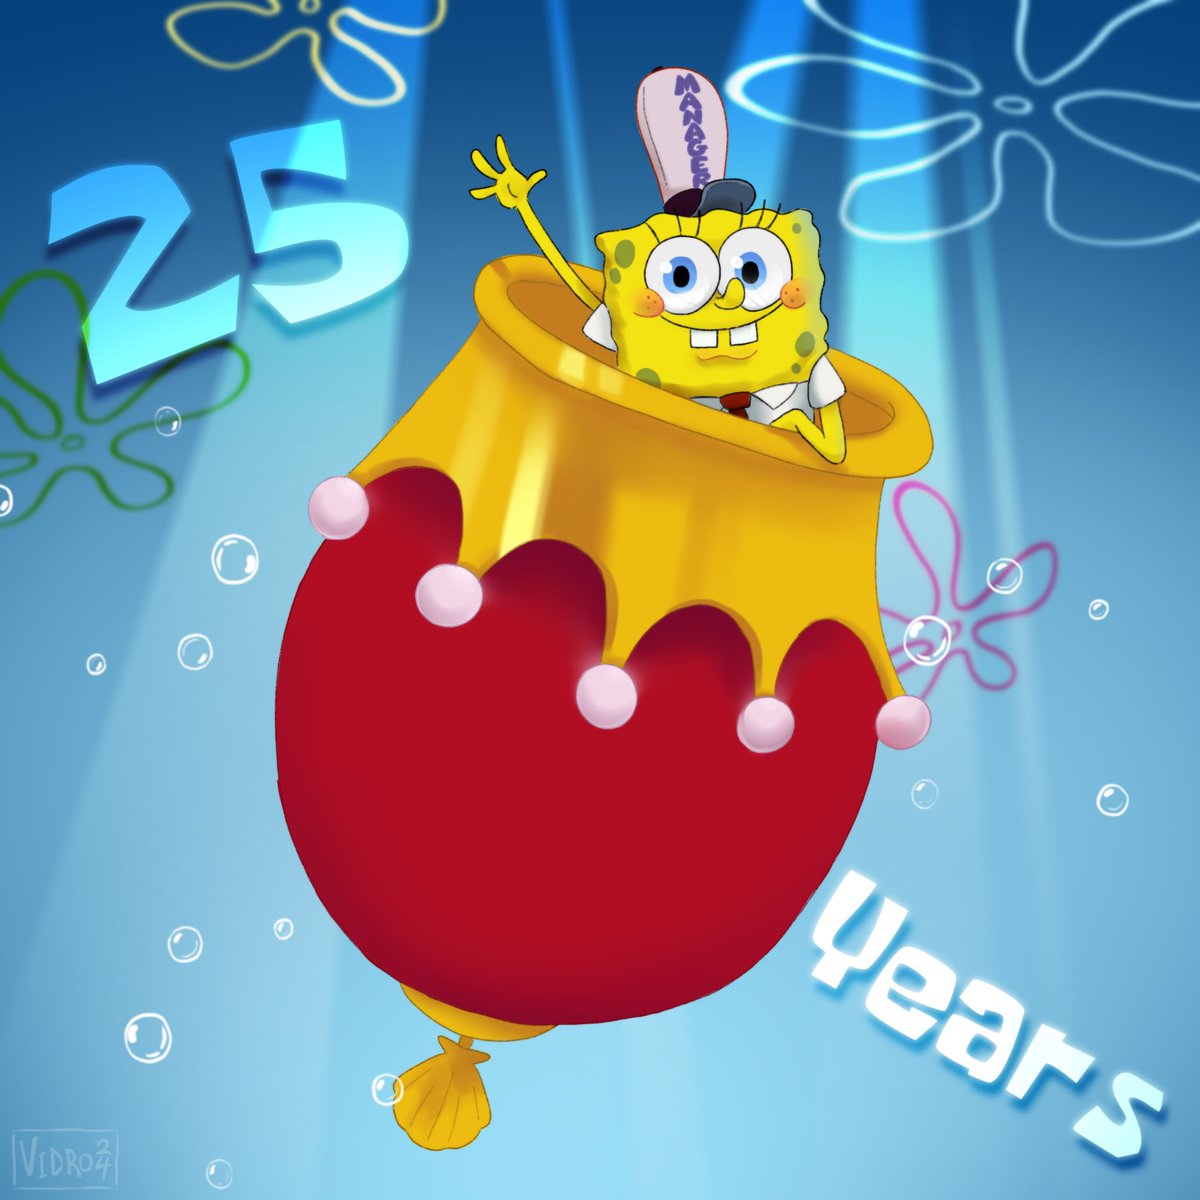 I love you spongebob 💙💚

#25yearsofspongebob #fanart